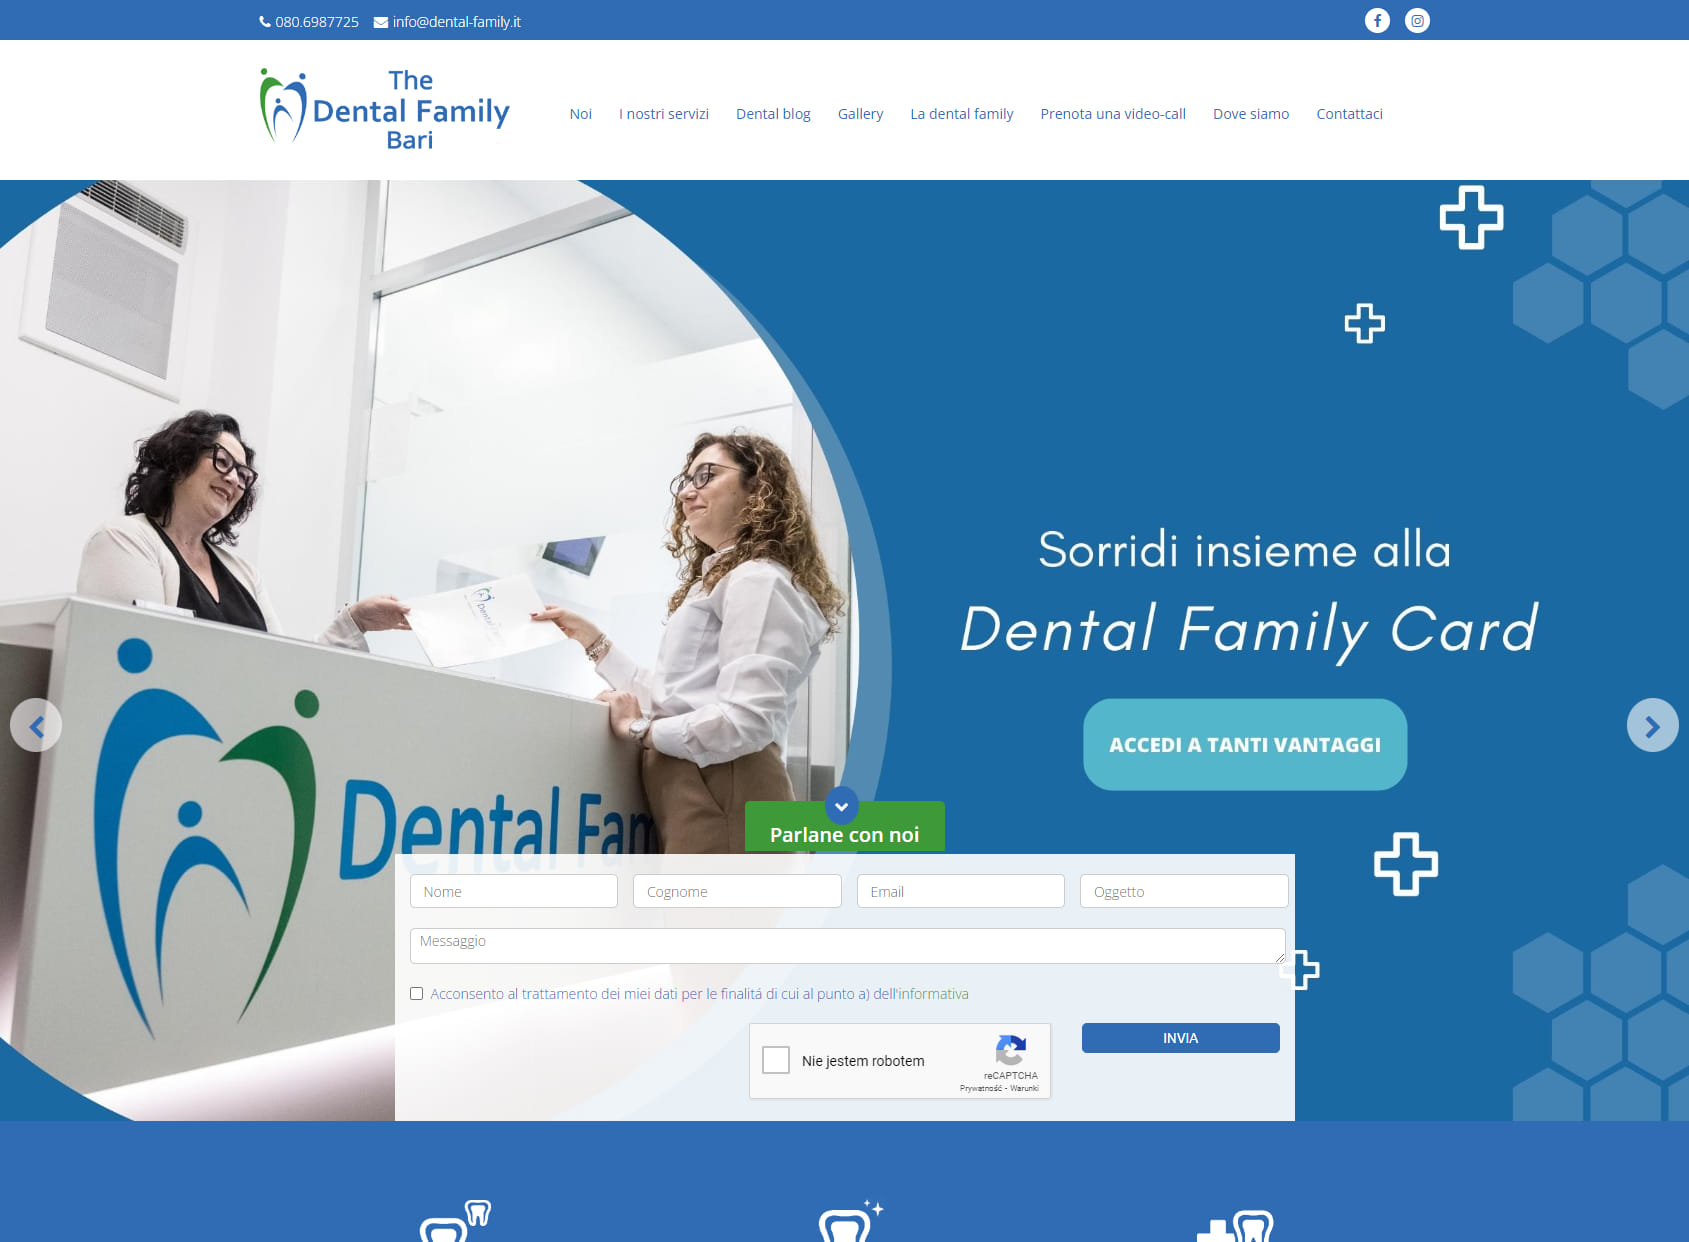 The Dental Family Bari - Dr. Zagaria